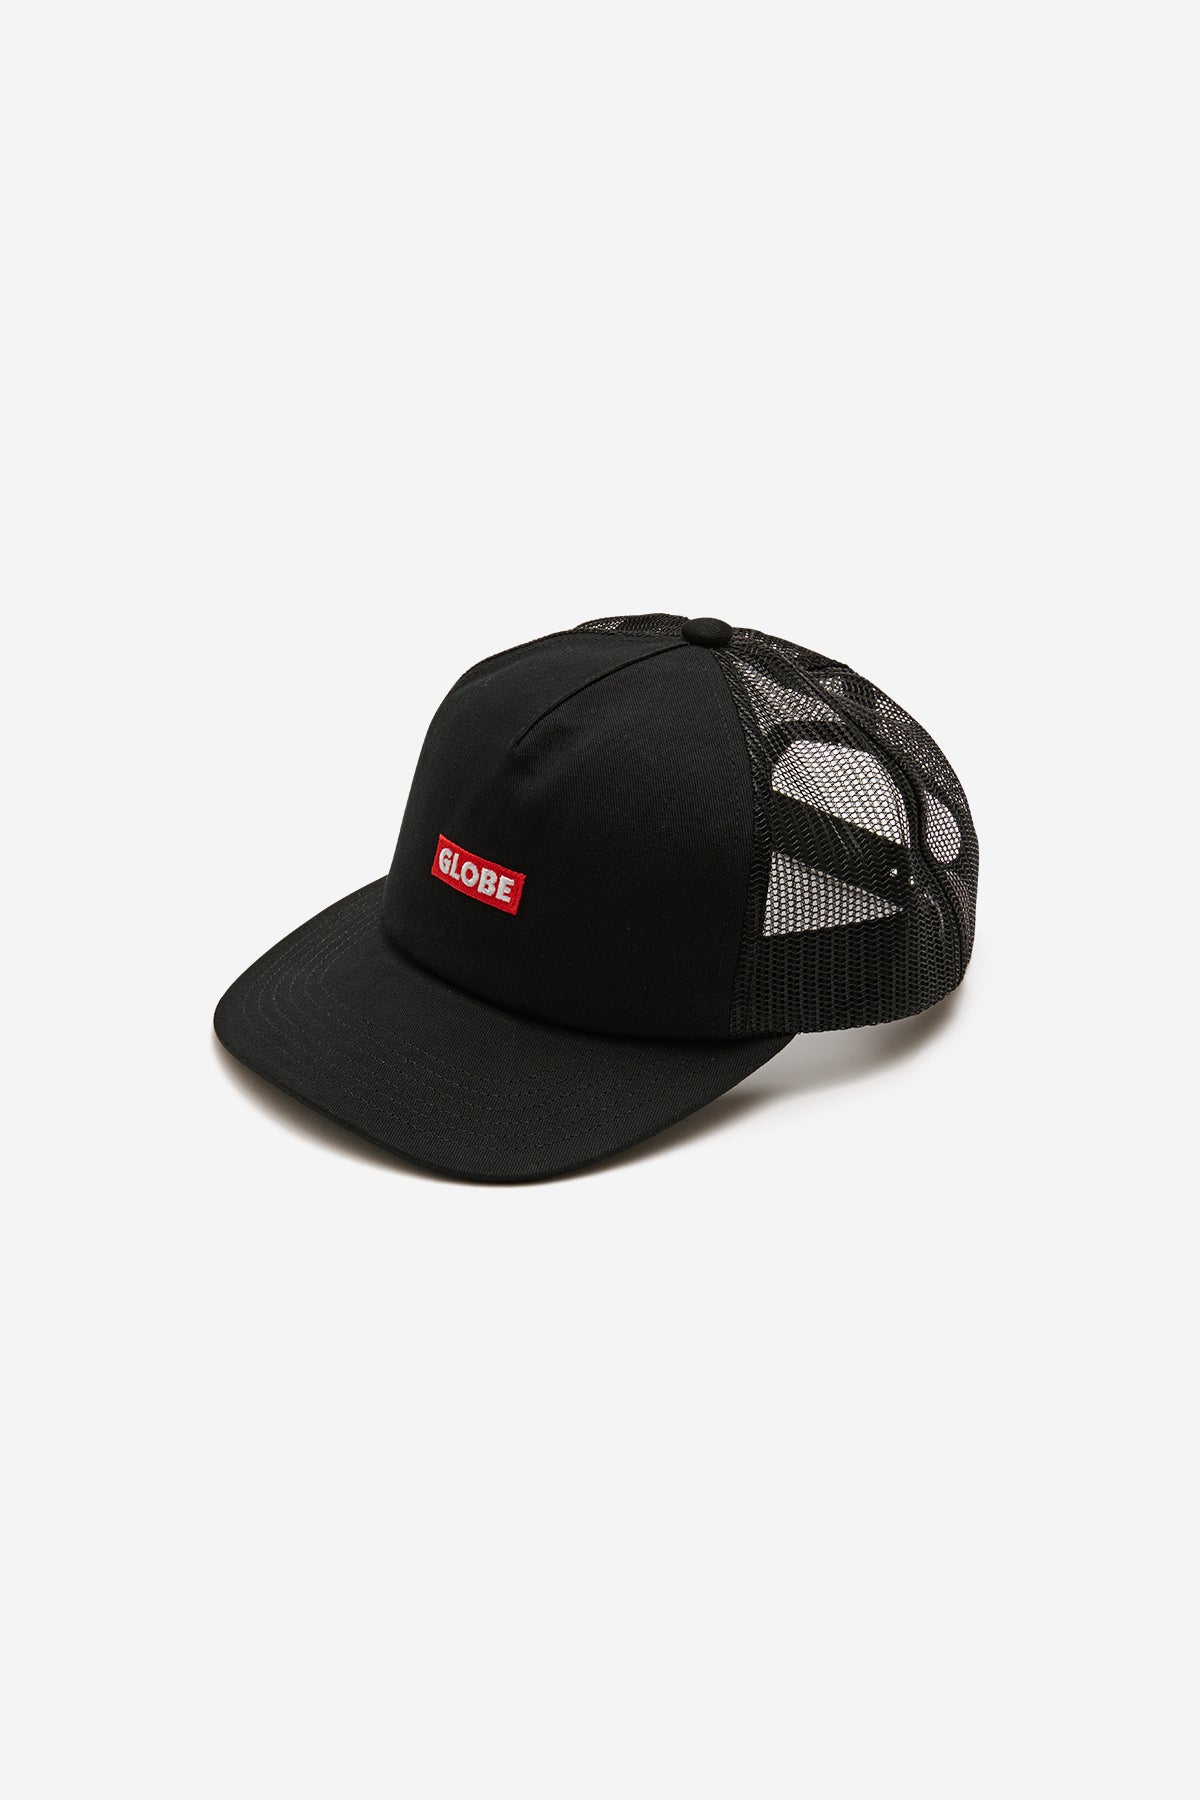 minibar trucker cap black